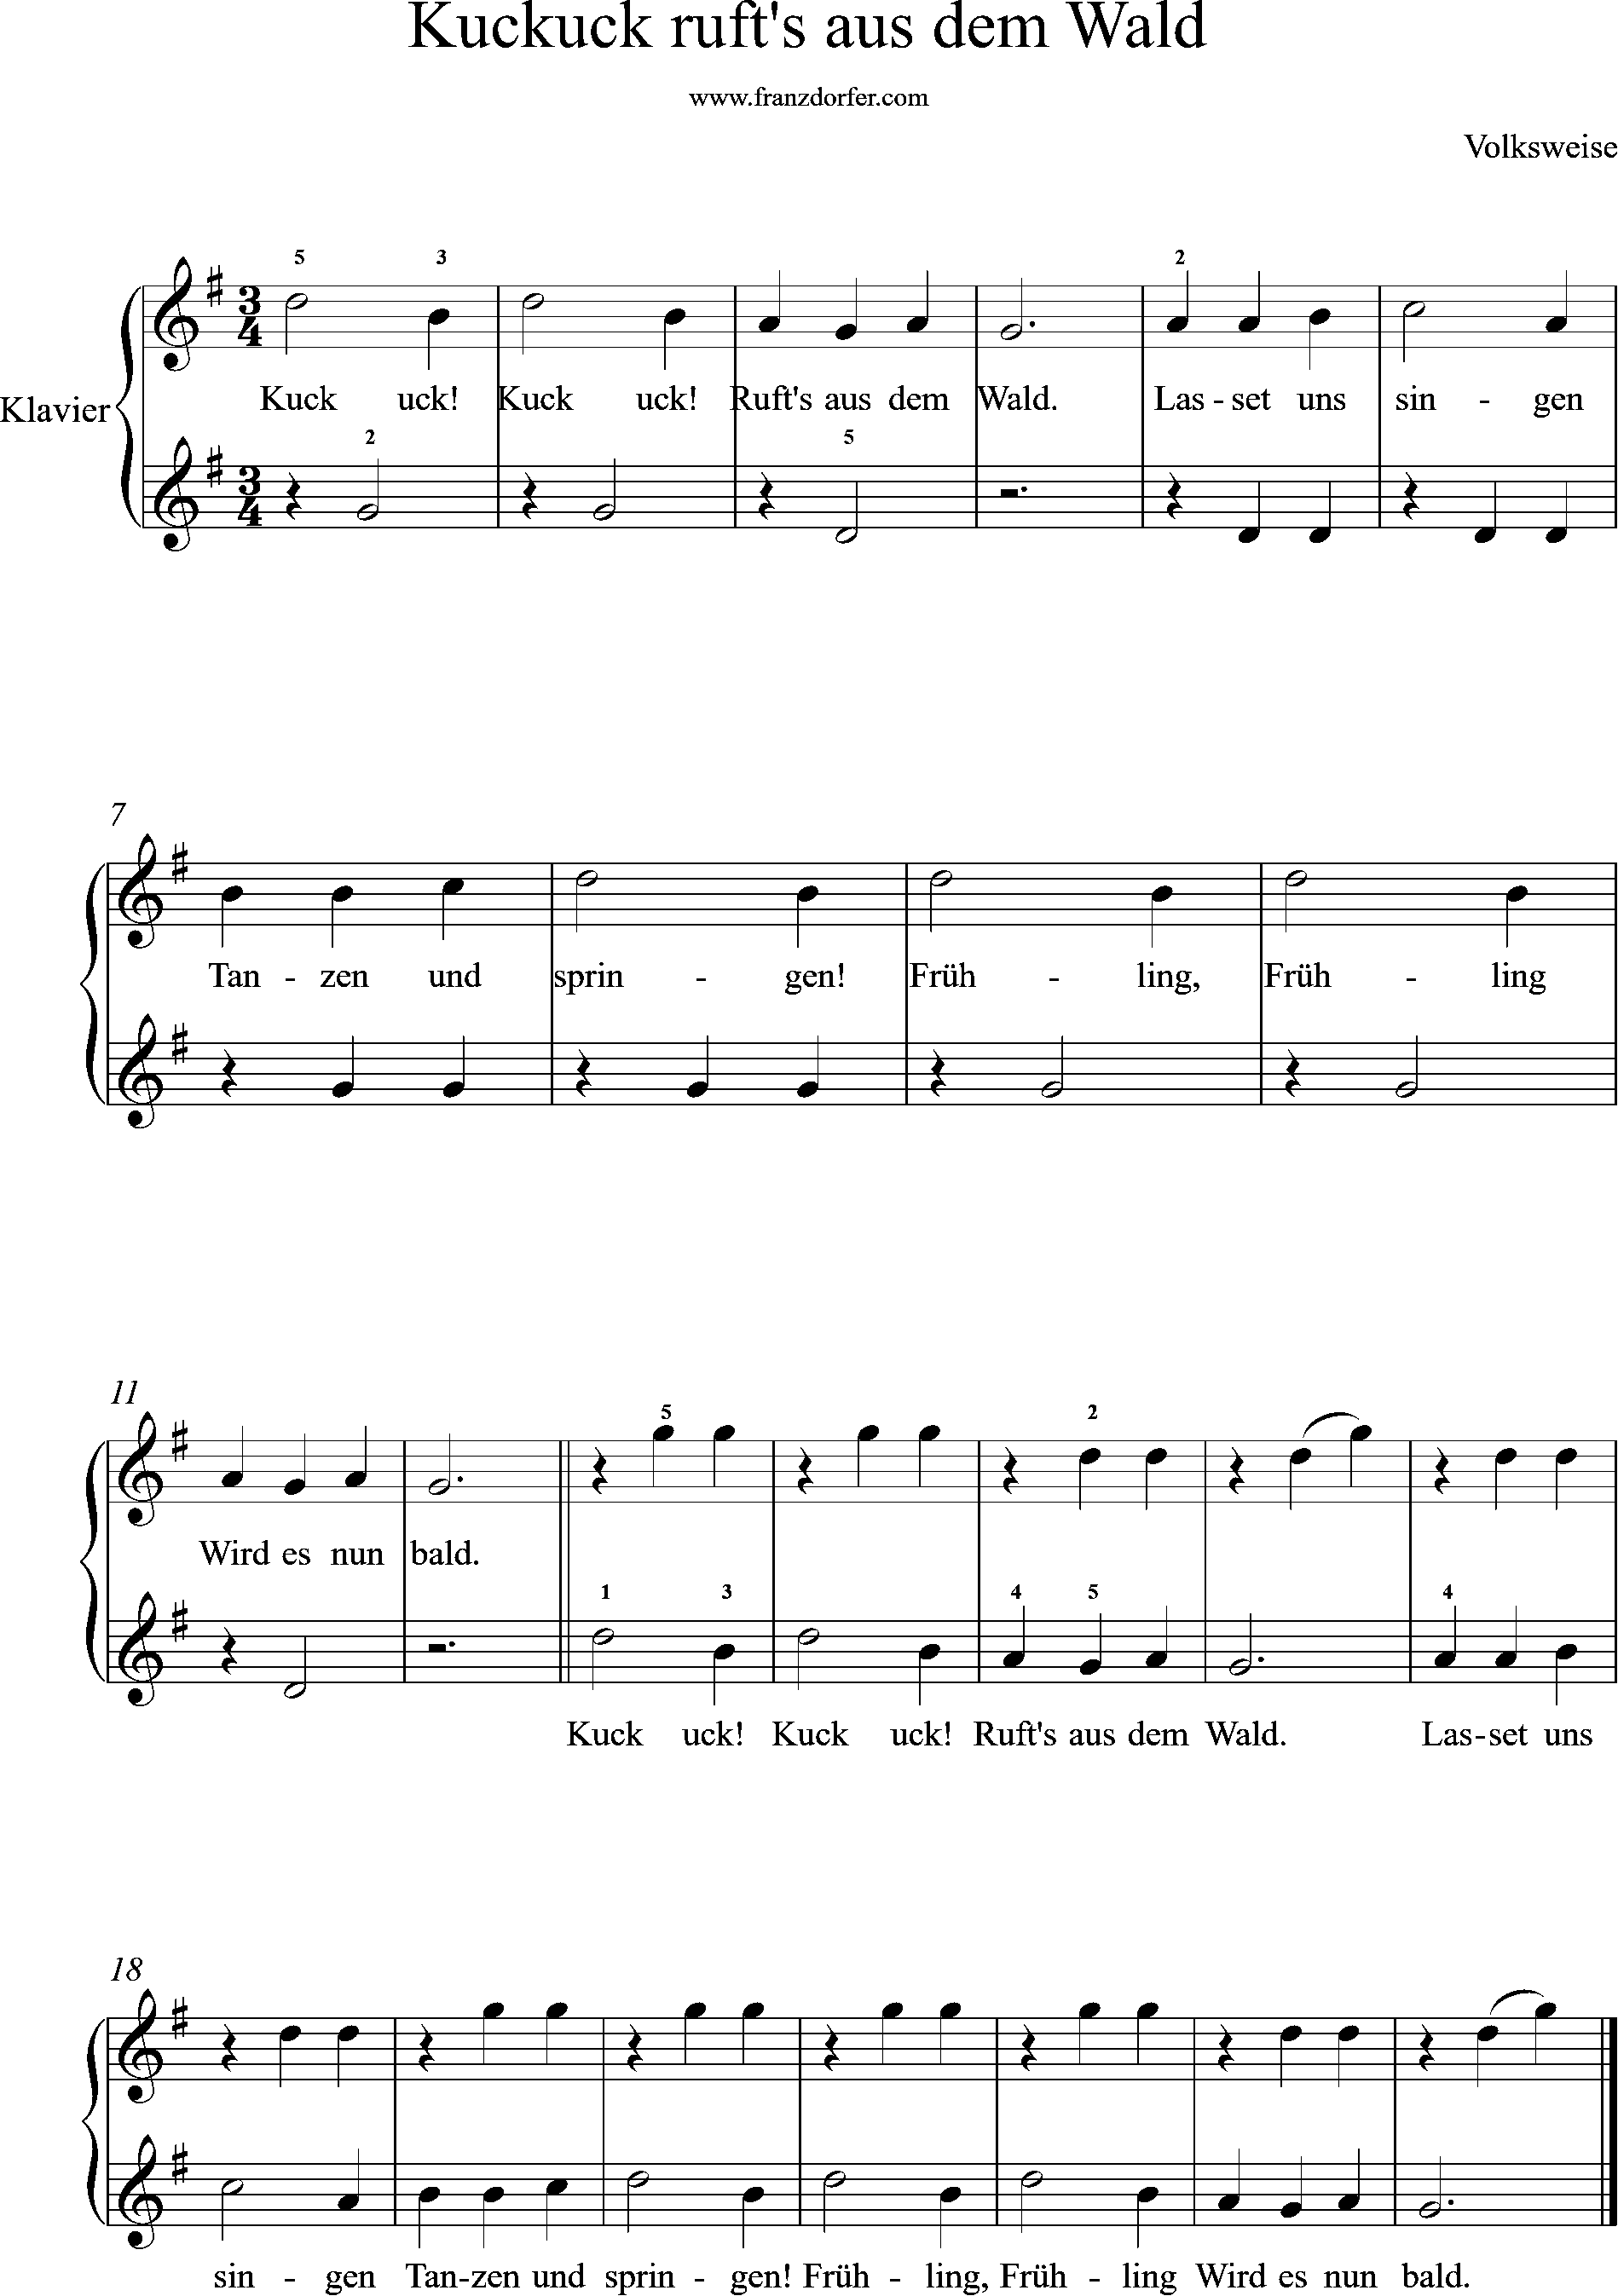 klaviernoten, Ferdinand Beyer, op.101, G-Dur, Kuckuck